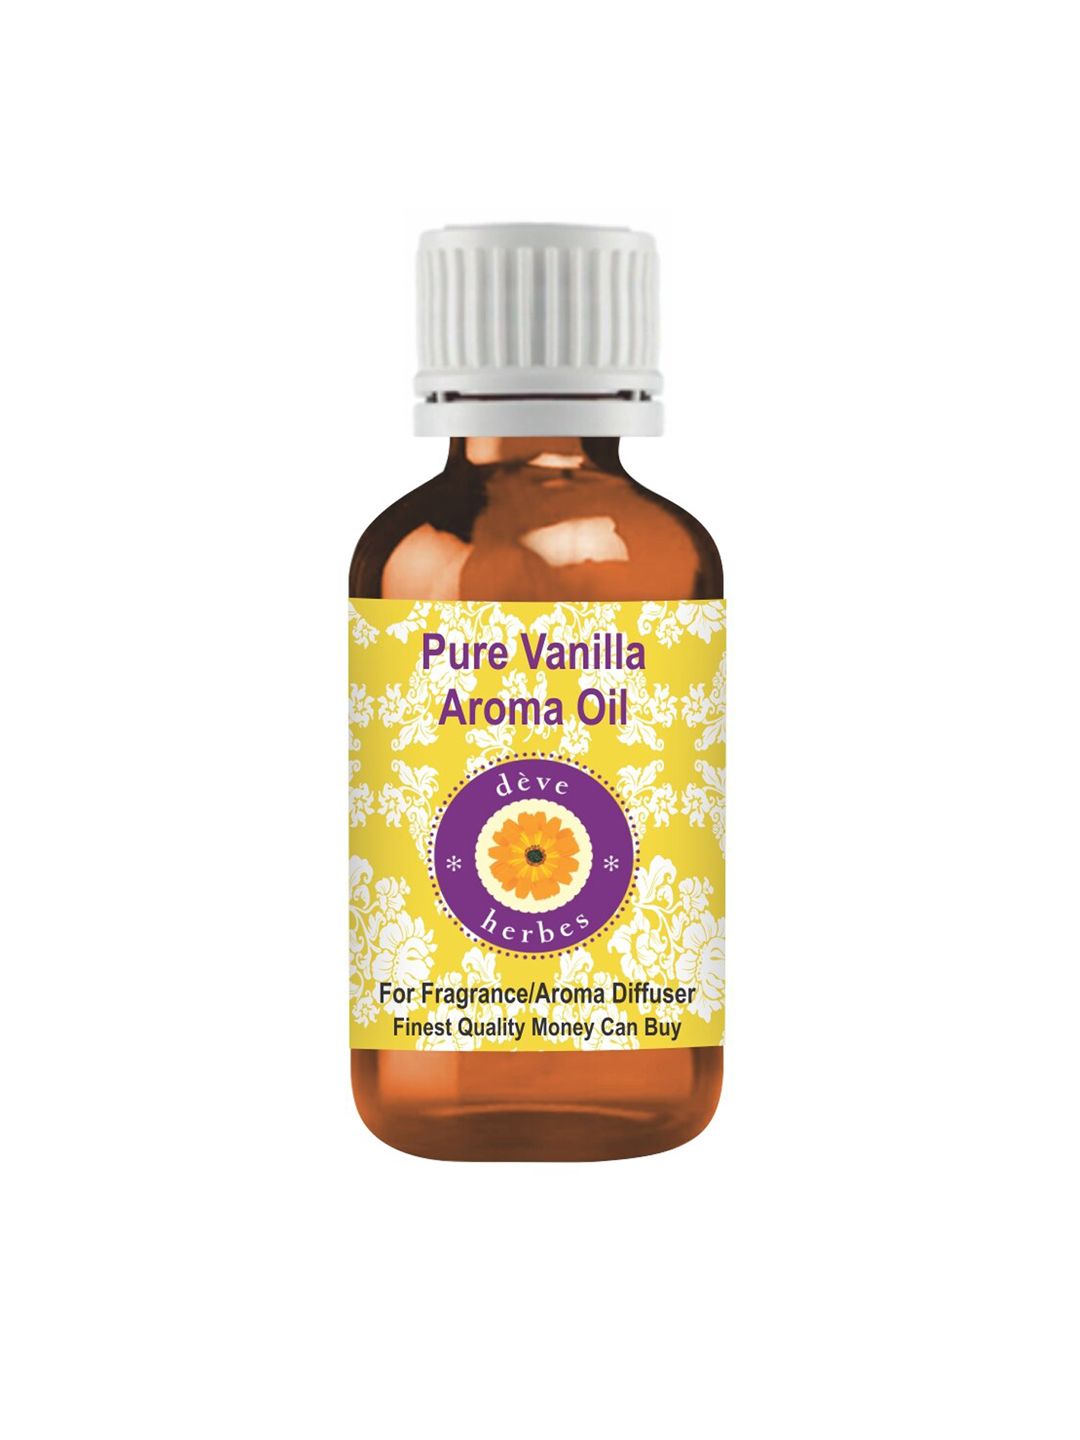 Deve Herbes Pure Vanilla Aroma Oil 15ml Price in India